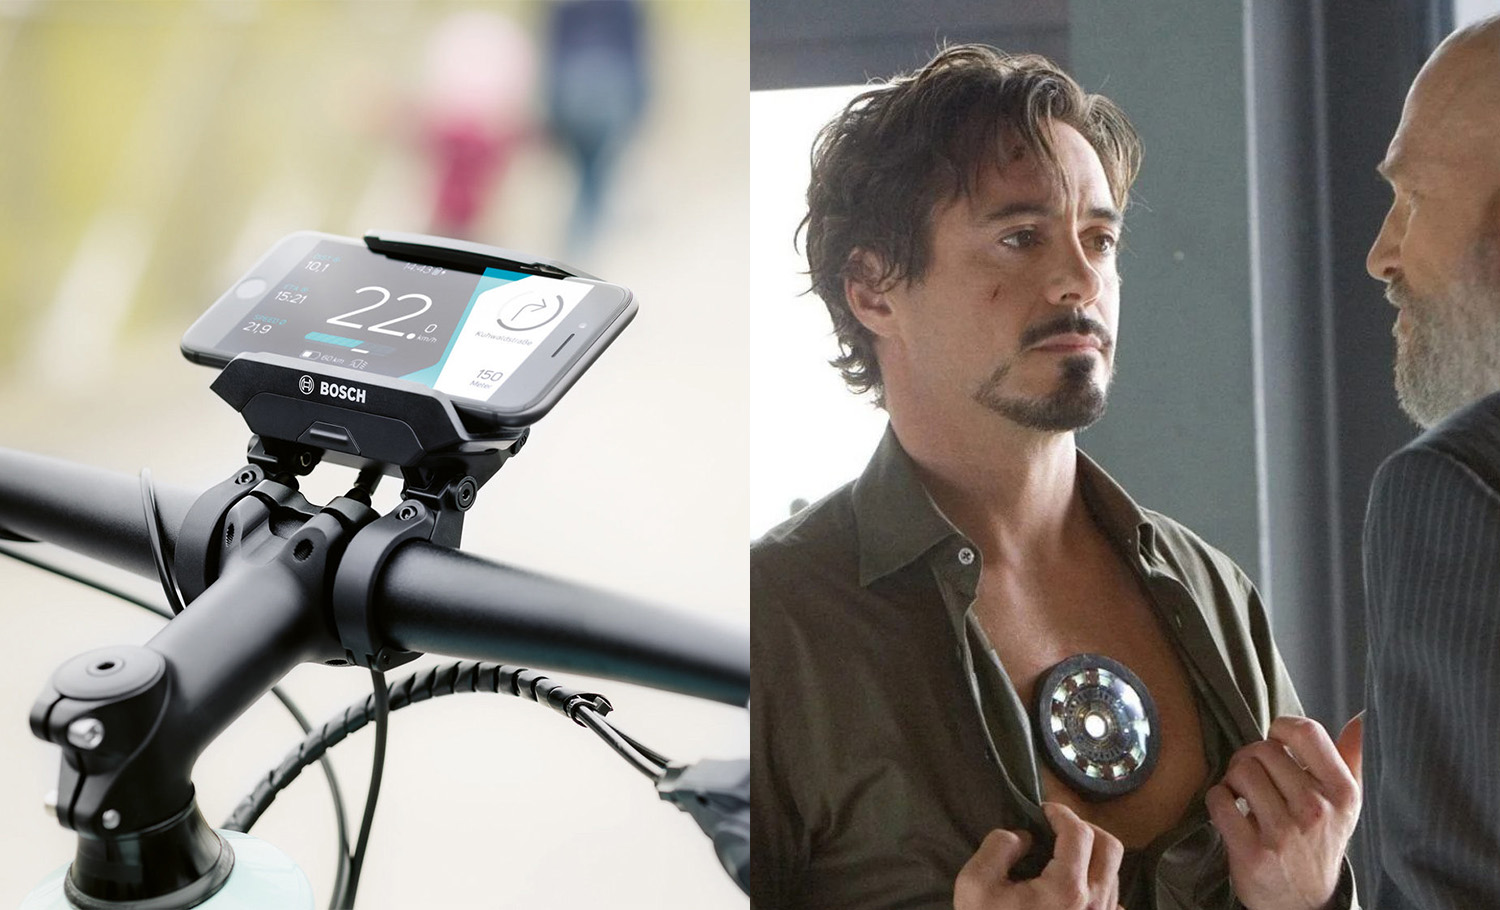 An e-bike phone mount, or Iron Man's heart?